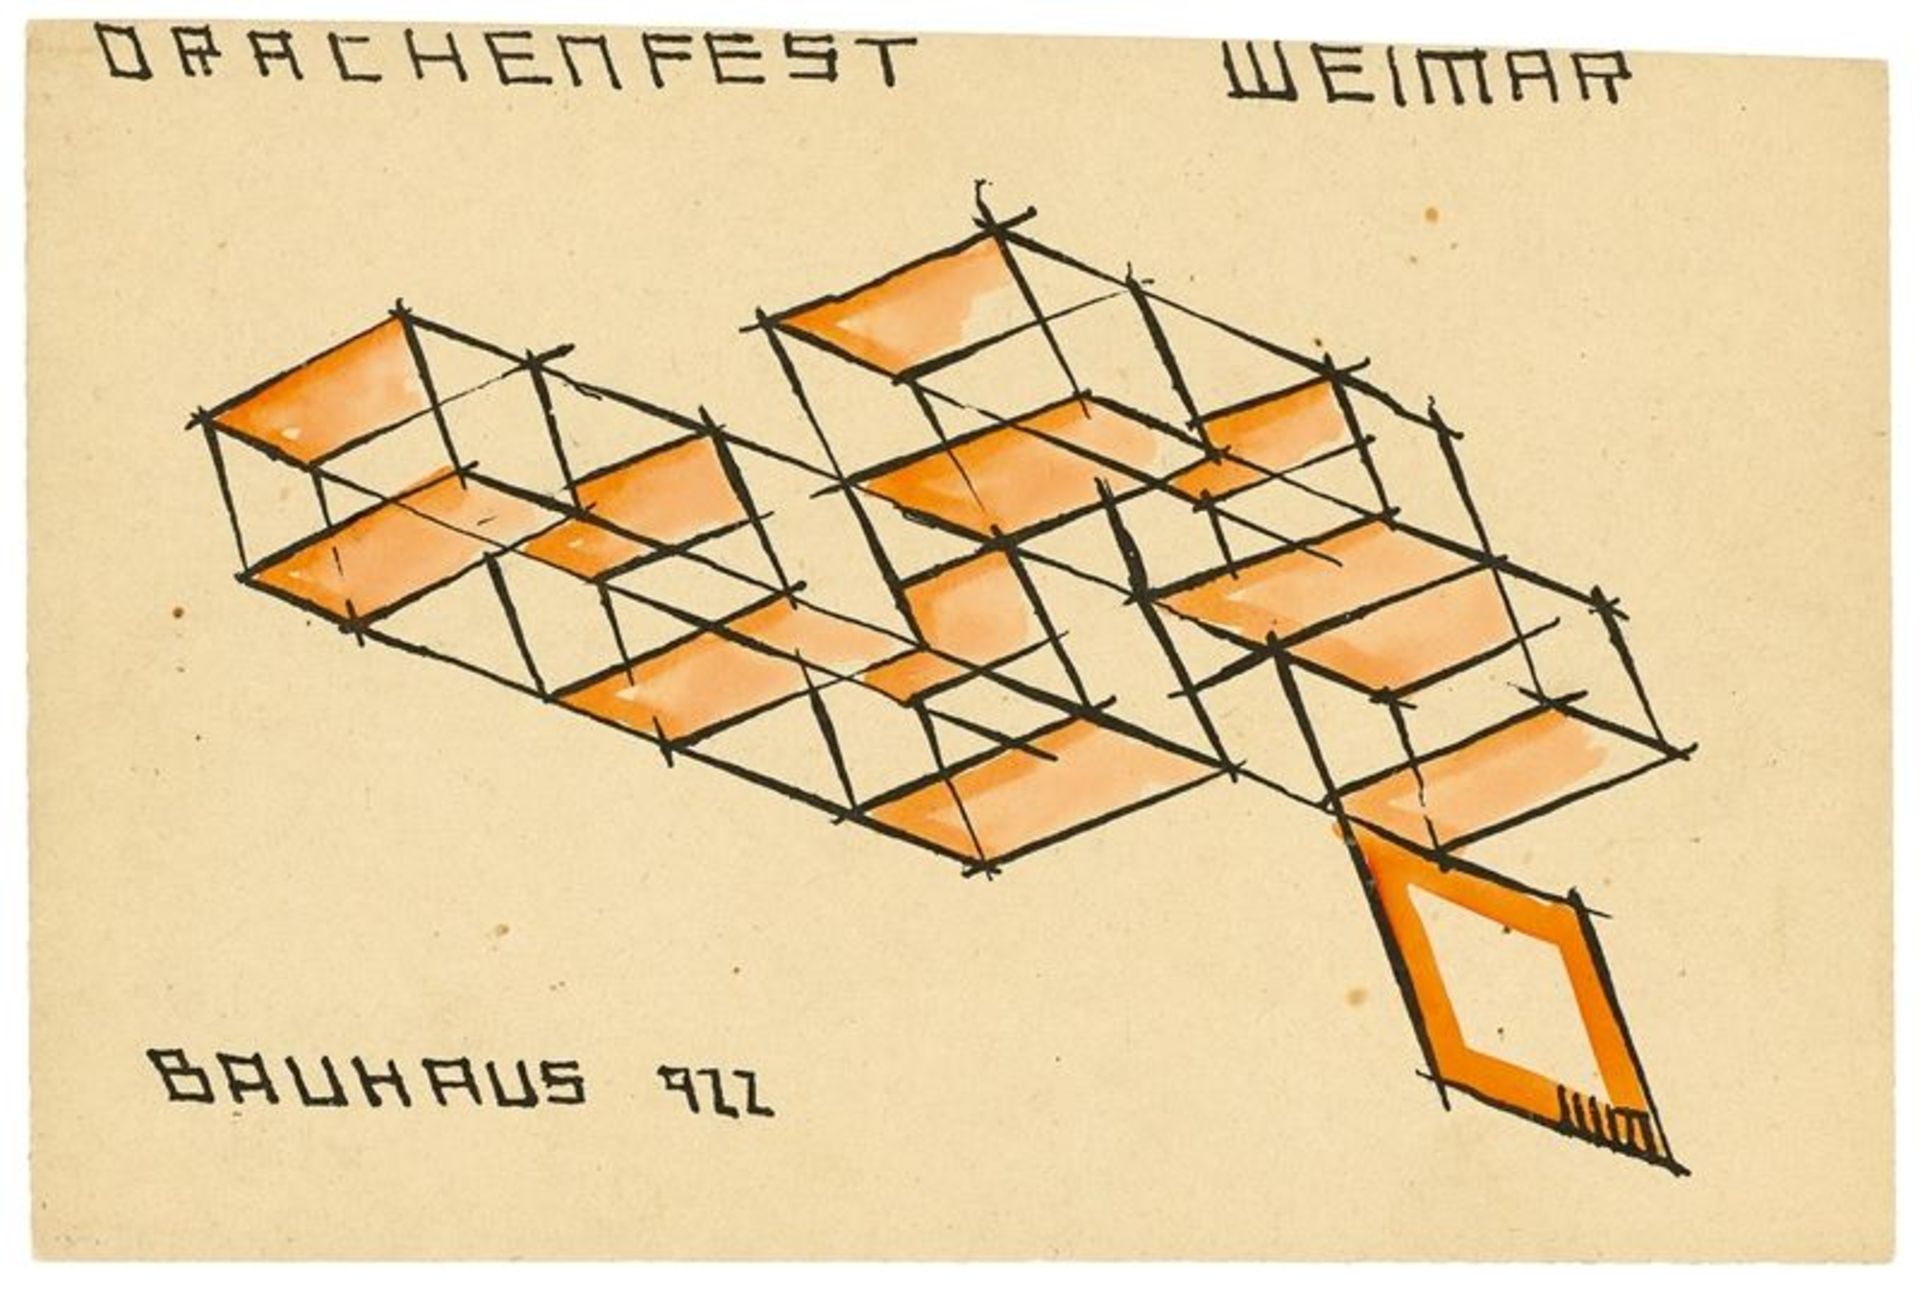 Farkas Ferenc Molnár (Pécs 1897 – 1945 Budapest)„Drachenfest Weimar Bauhaus 922“. 1922Lithografie,